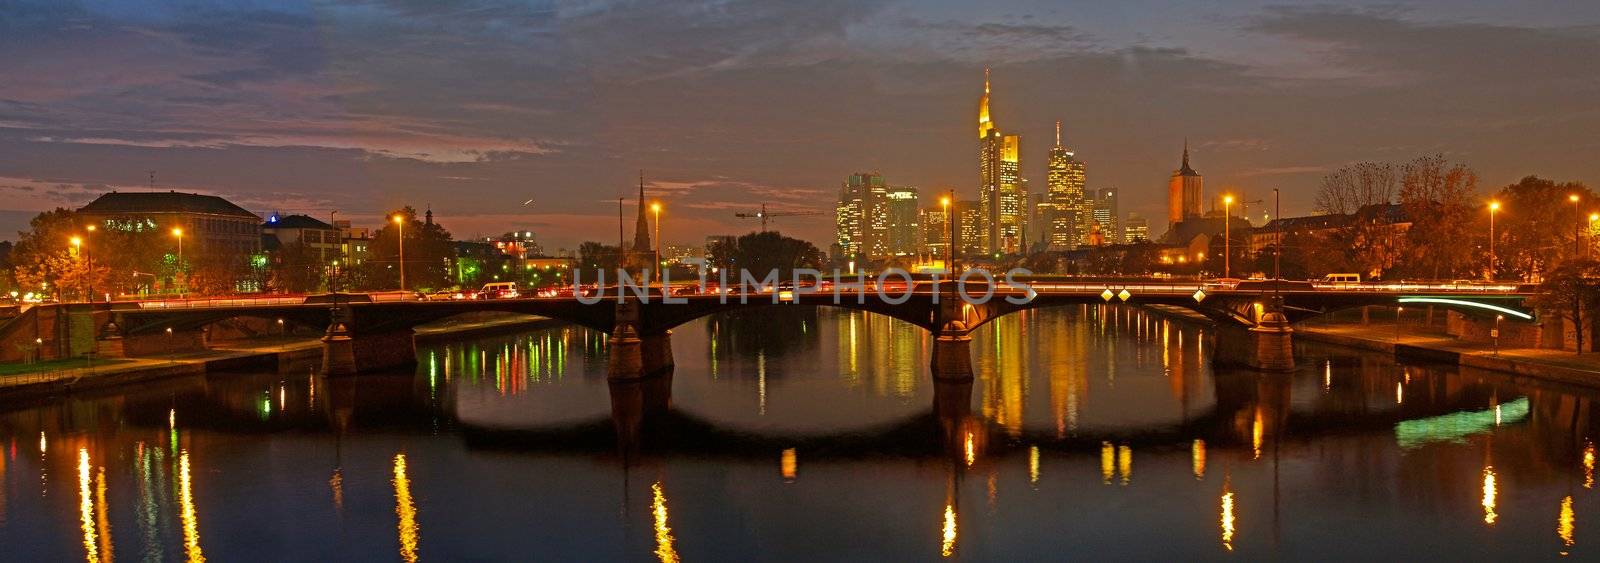 Skyline of Frankfurt in the evening, Germany
